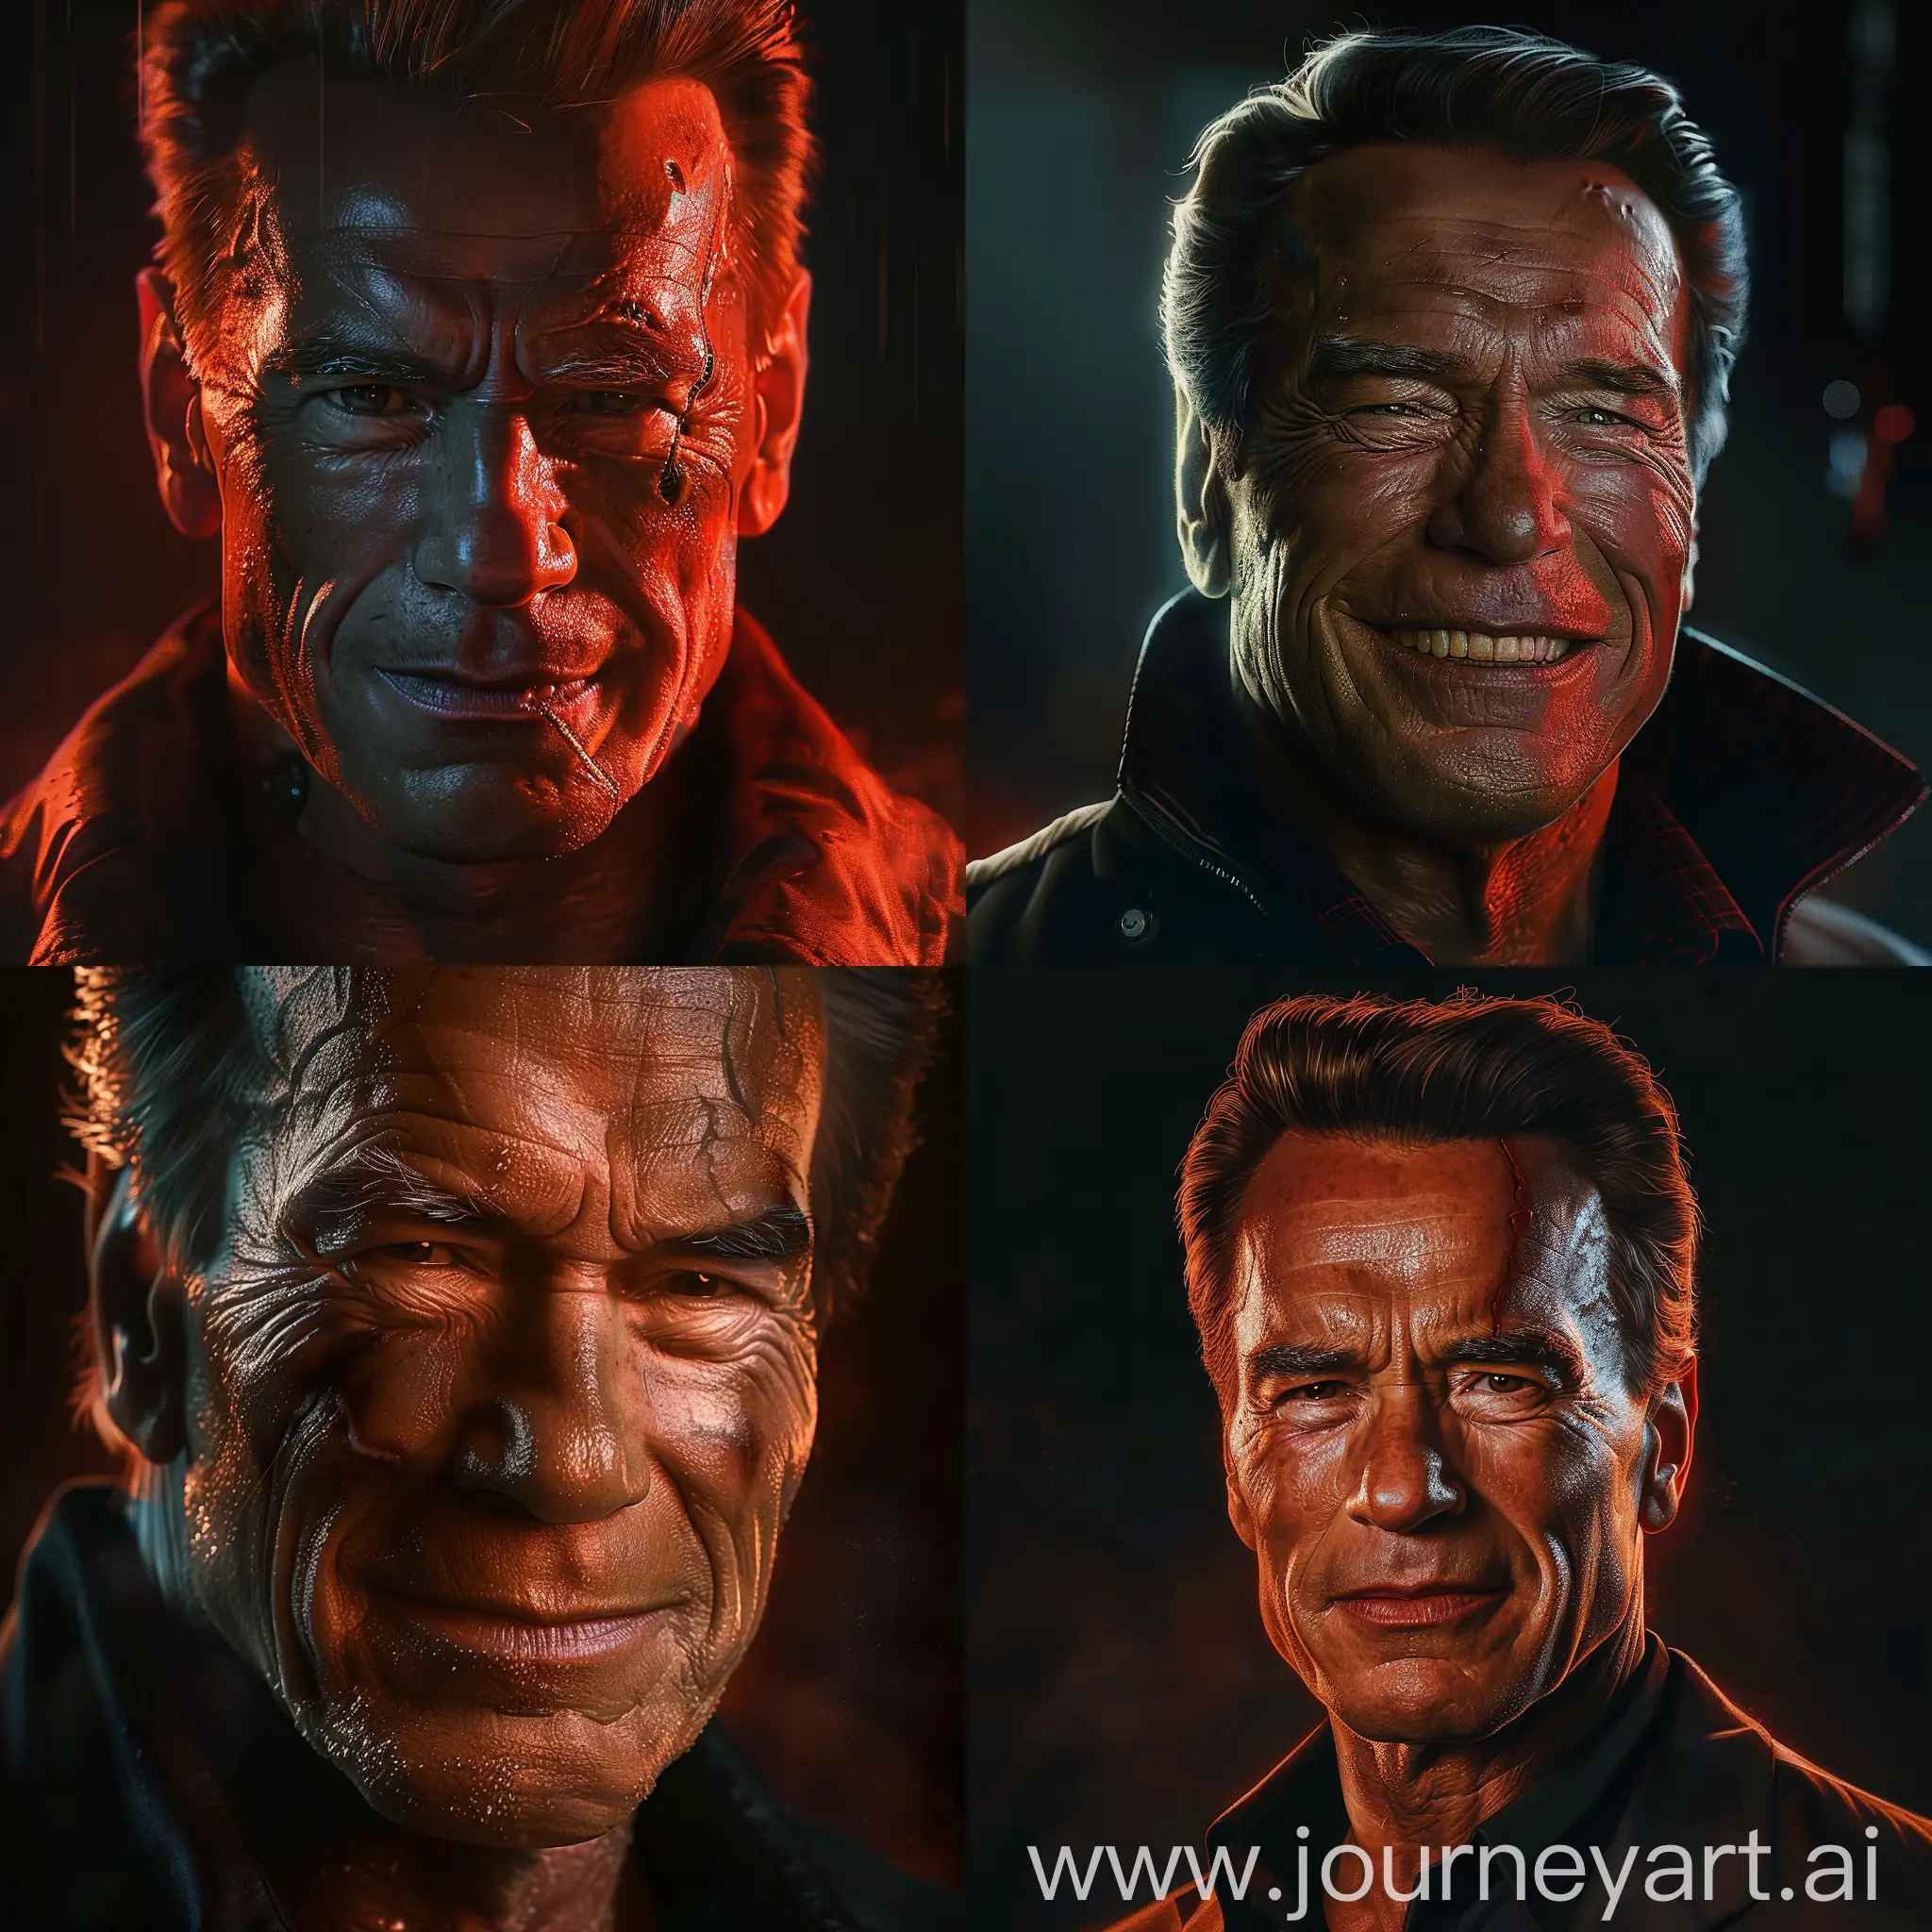 Sinister-Portrait-of-Arnold-Schwarzenegger-with-Devilish-Smile-and-Reddish-Lighting